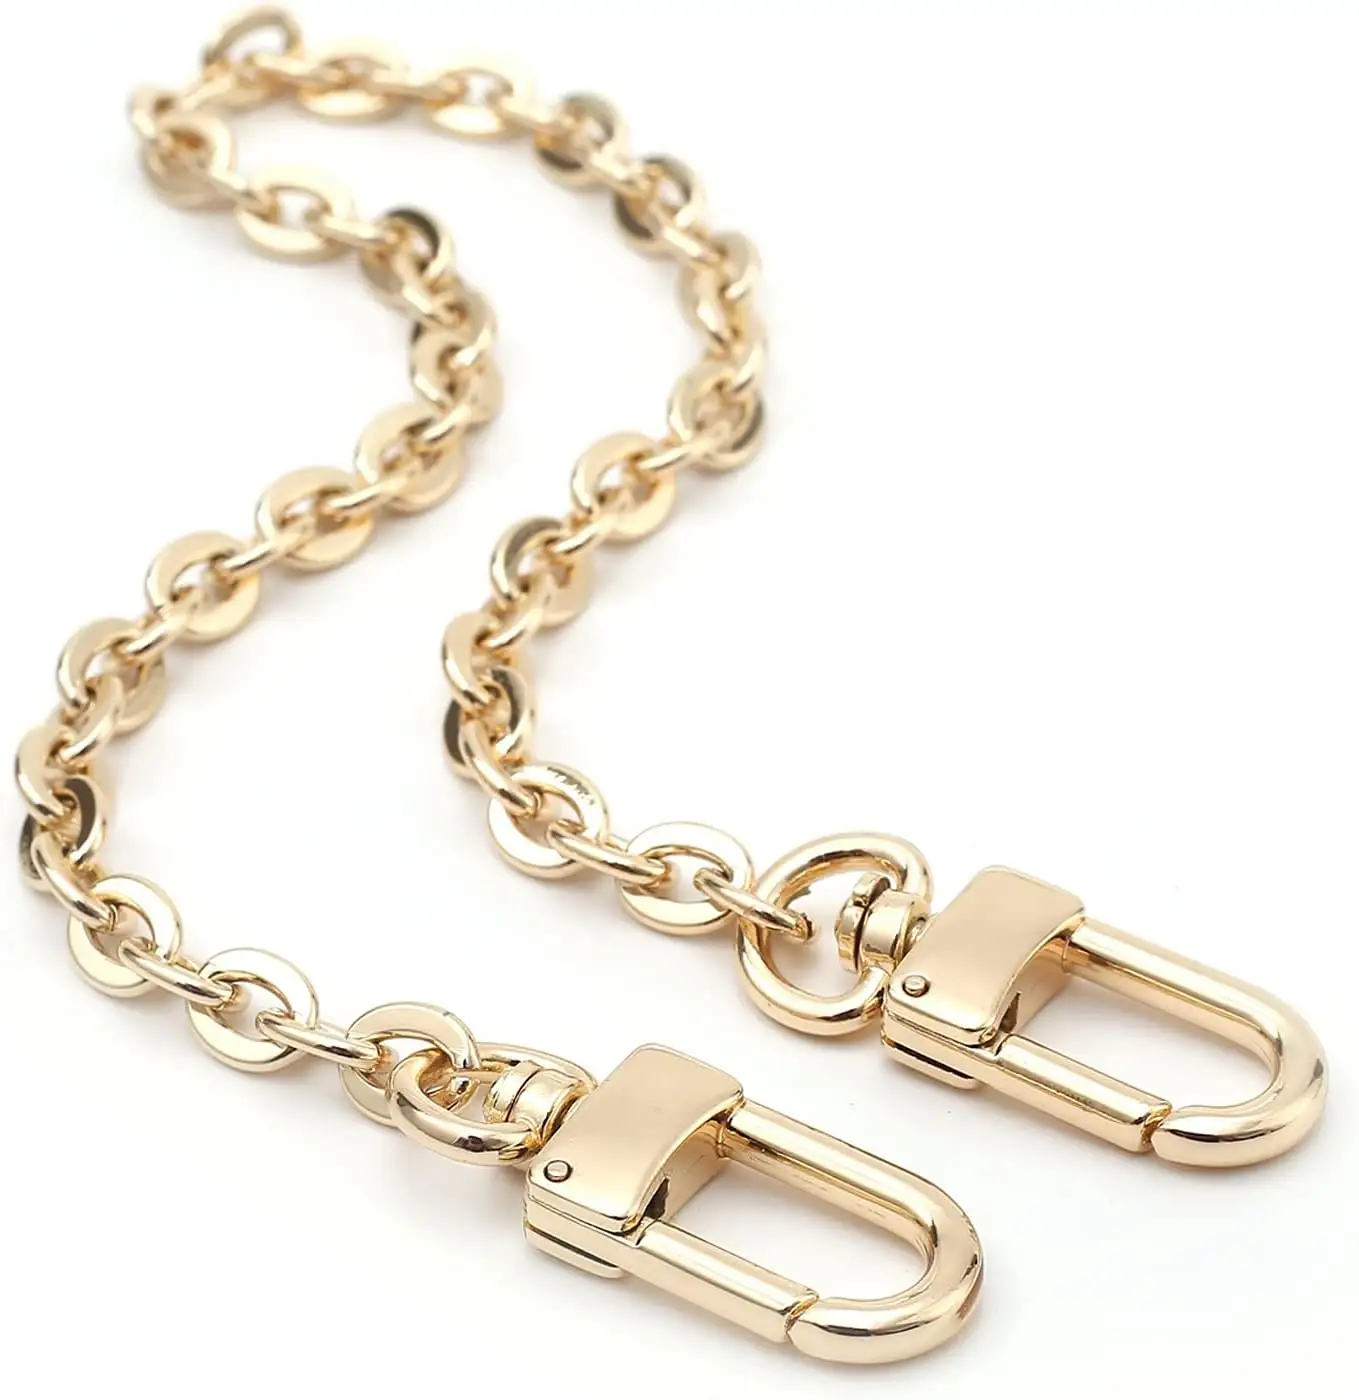 Mini Copper Purse Chains Shoulder Crossbody Strap Bag Accessories Charm Decoration